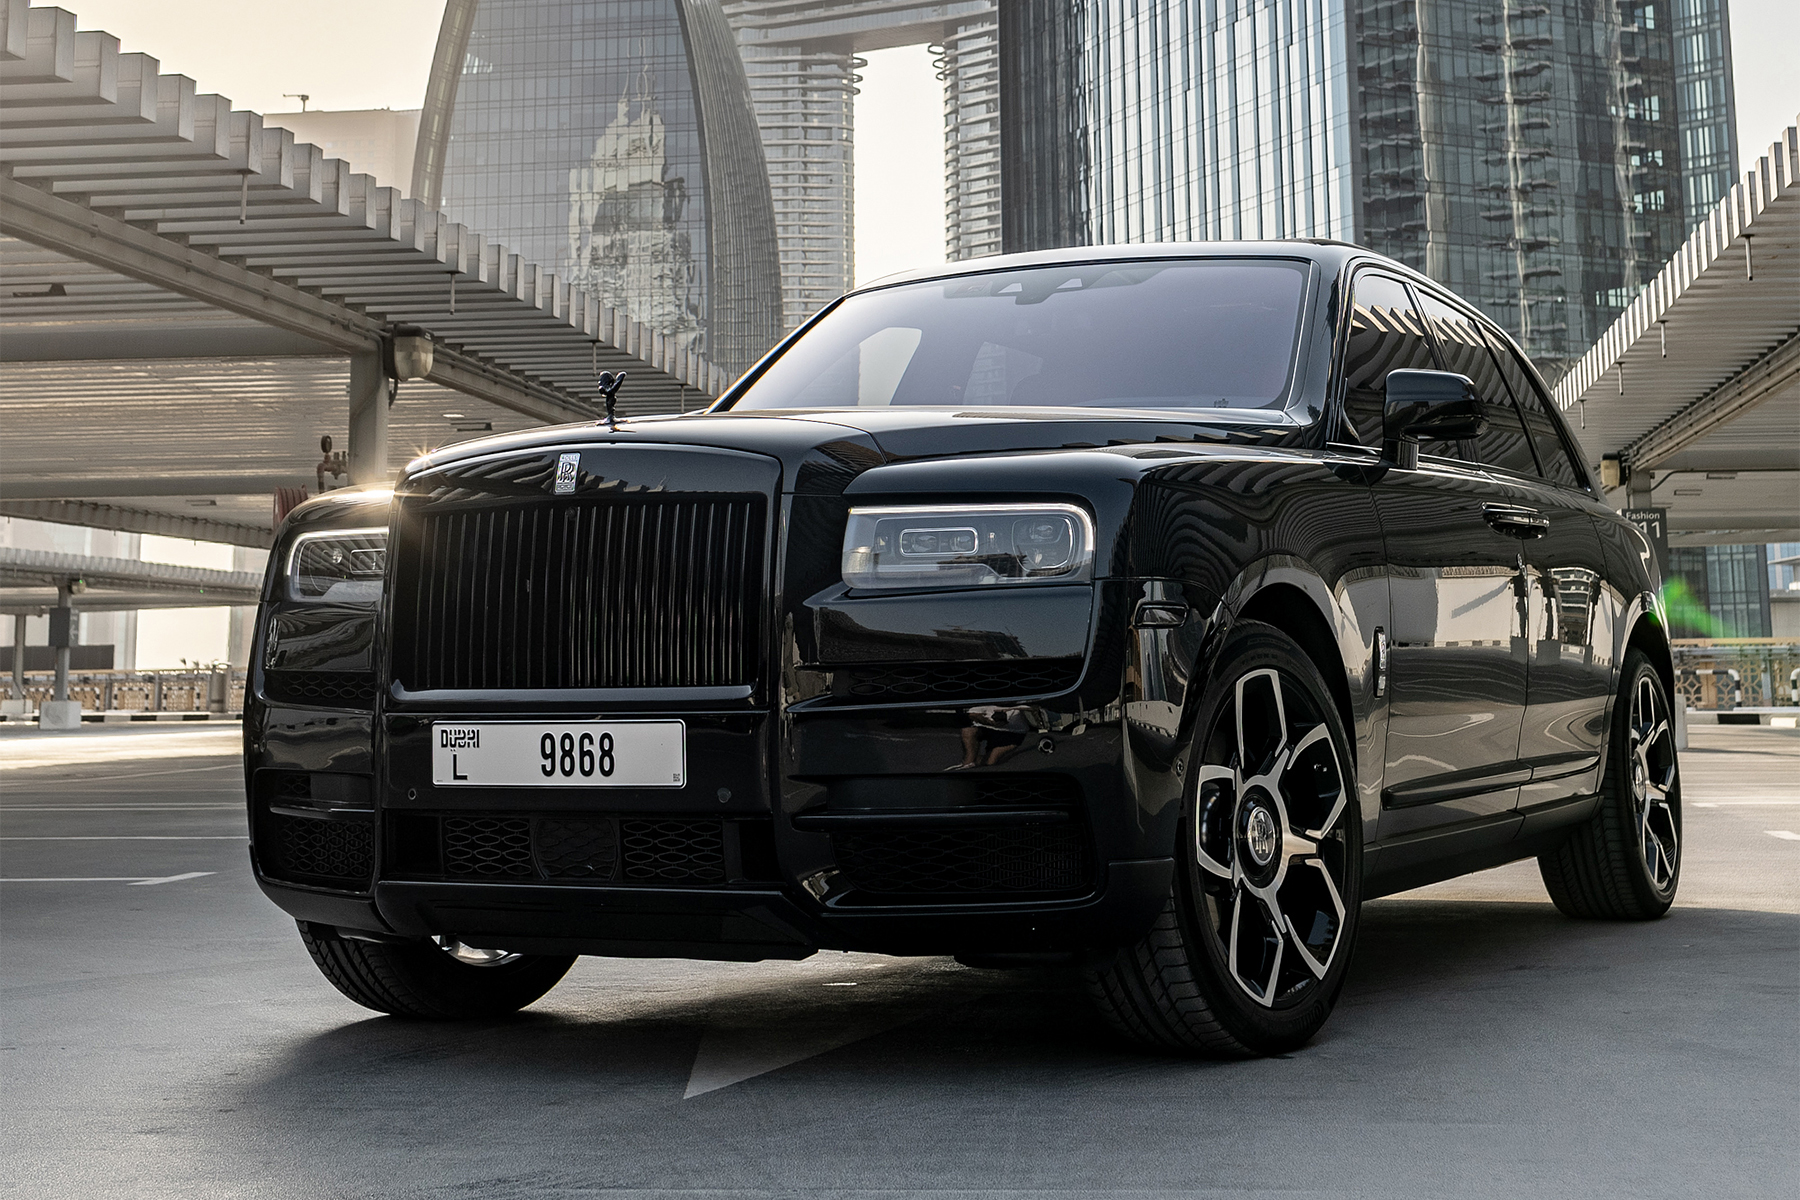 Hire Rolls Royce Ghost With Driver in Dubai  Chauffeur Car Rental